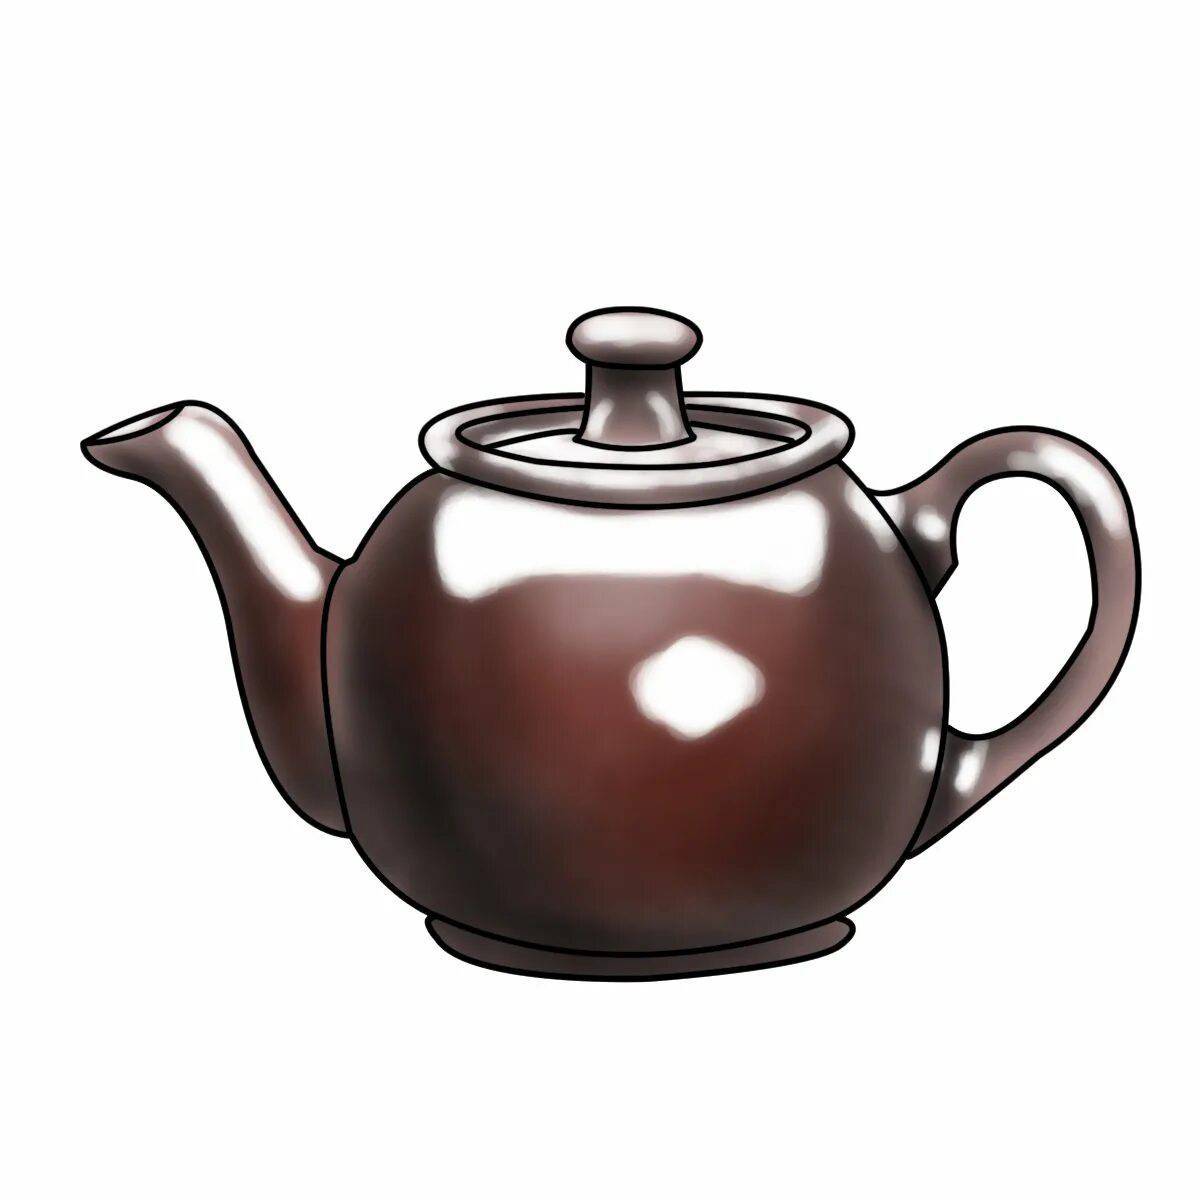 Рисунок чайника. Чайник рисунок. Чайник картинка для детей. Заварной чайник рисунок. Текстура чайника.